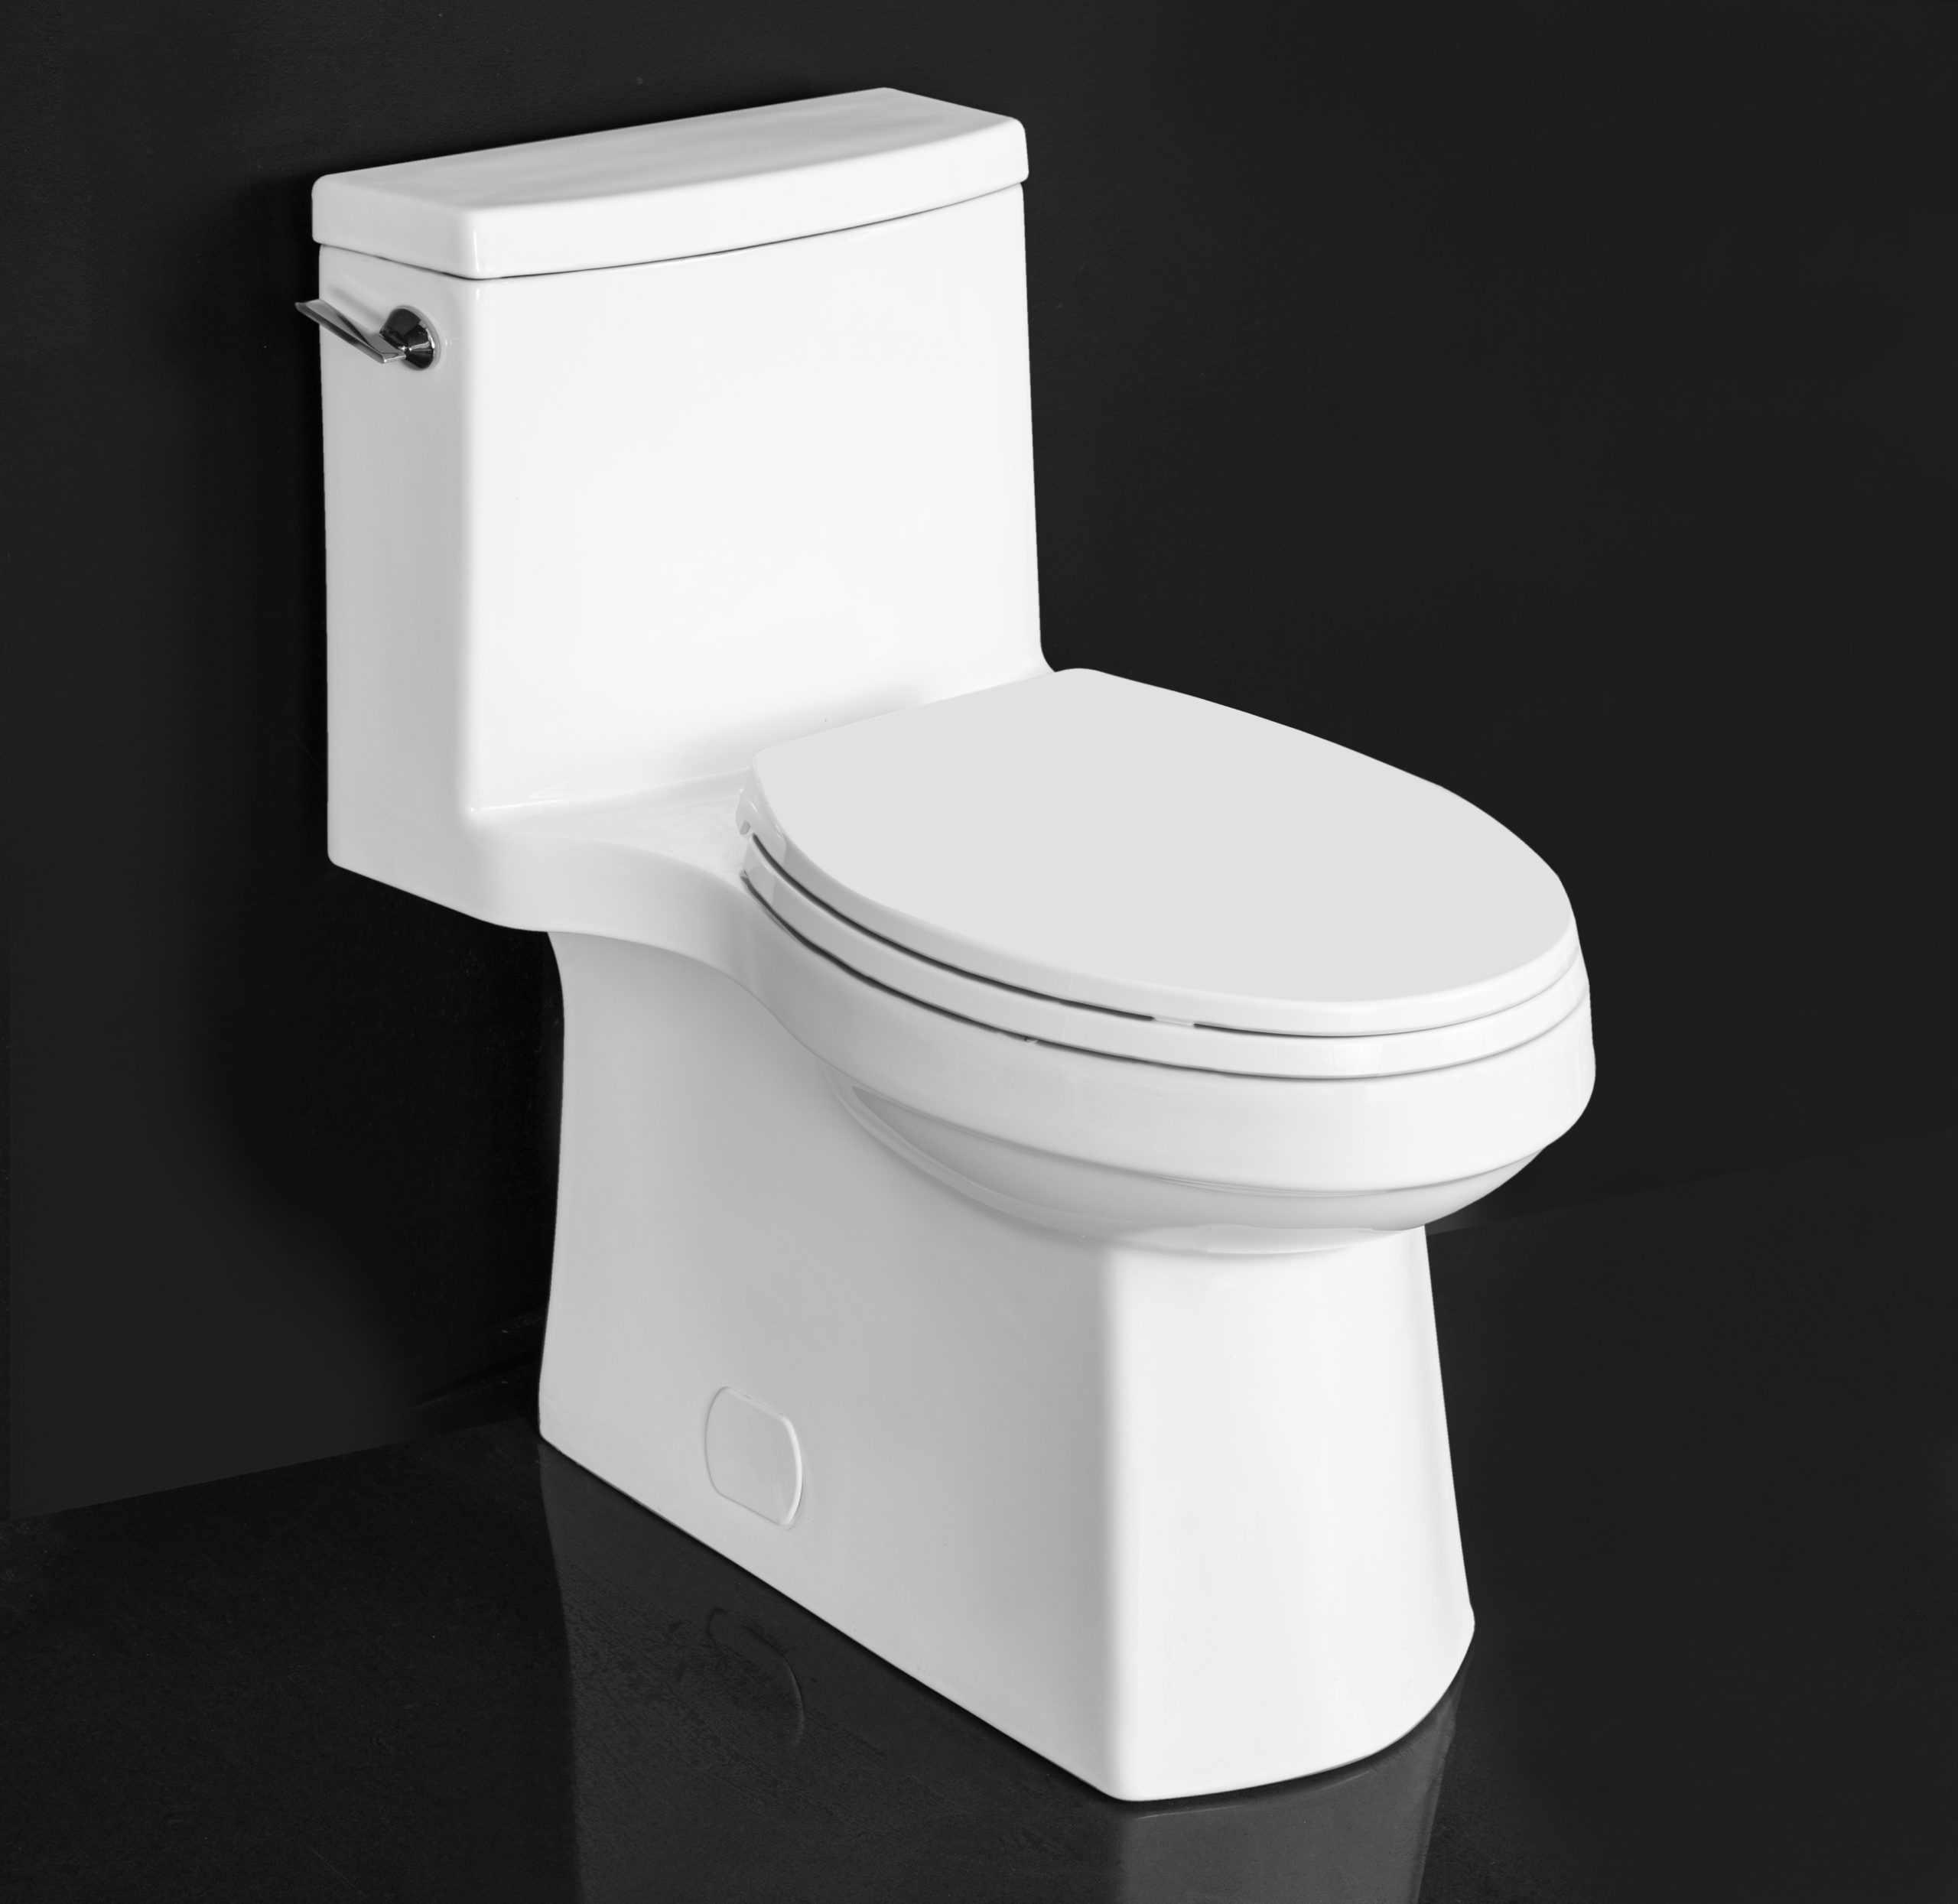 Glencairn - TL-1223HCA-EW - 1PC Toilet